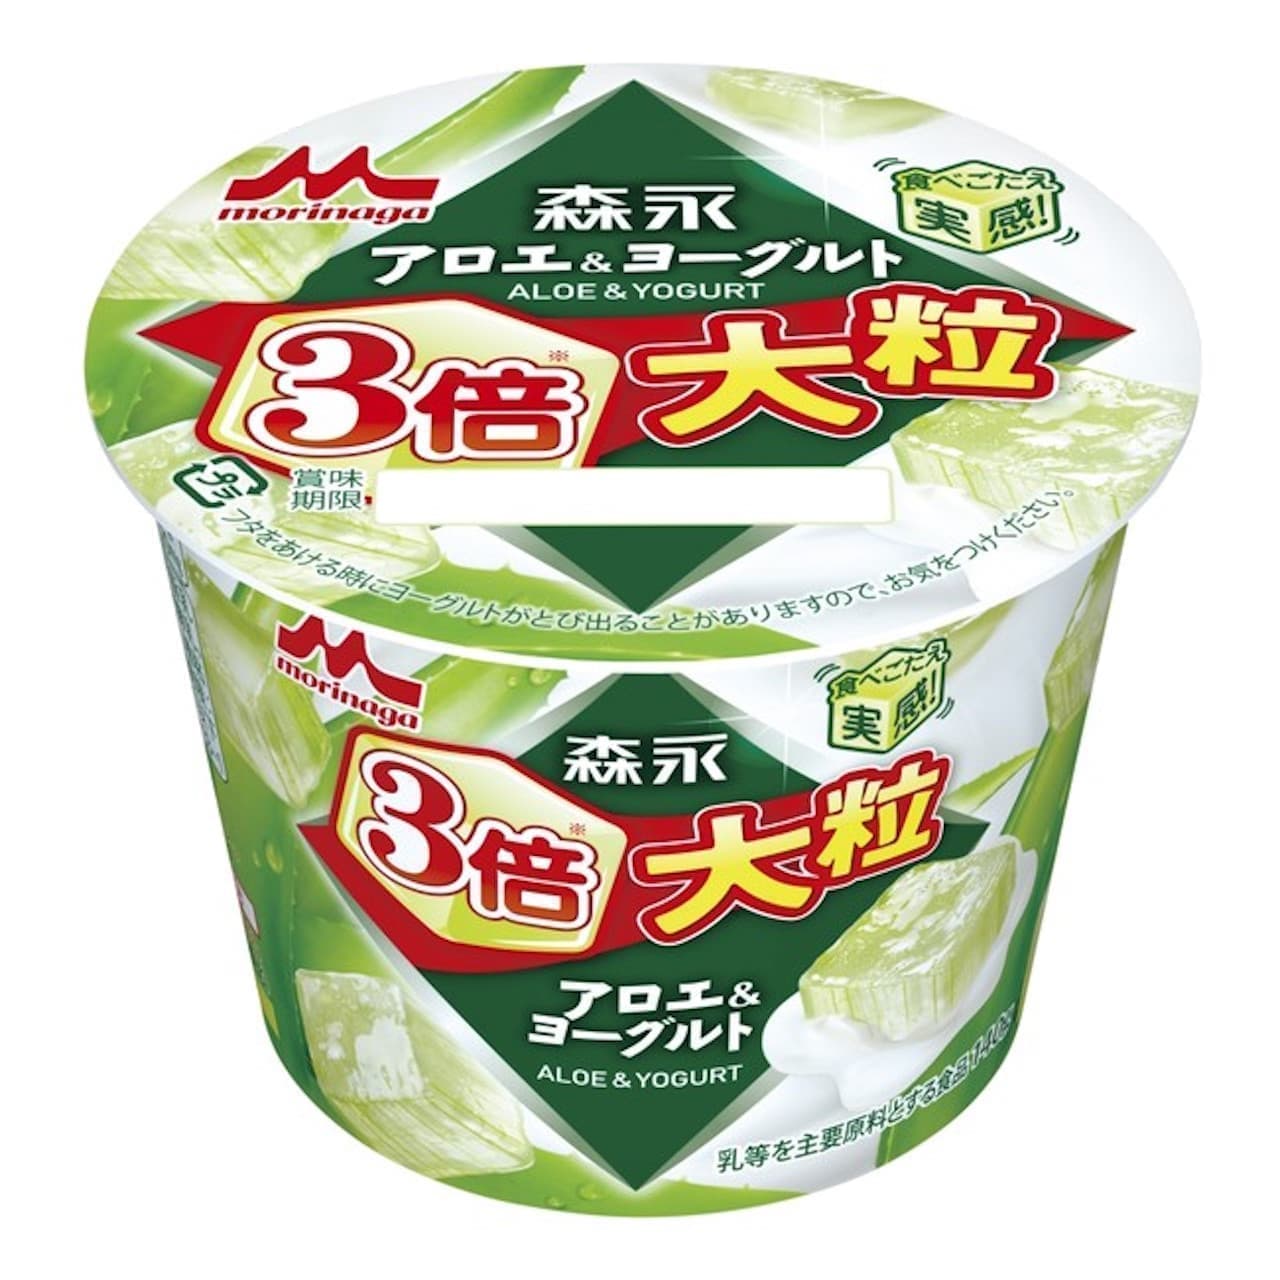 "Morinaga Aloe & Yogurt 3x Larger" from Morinaga Milk Industry